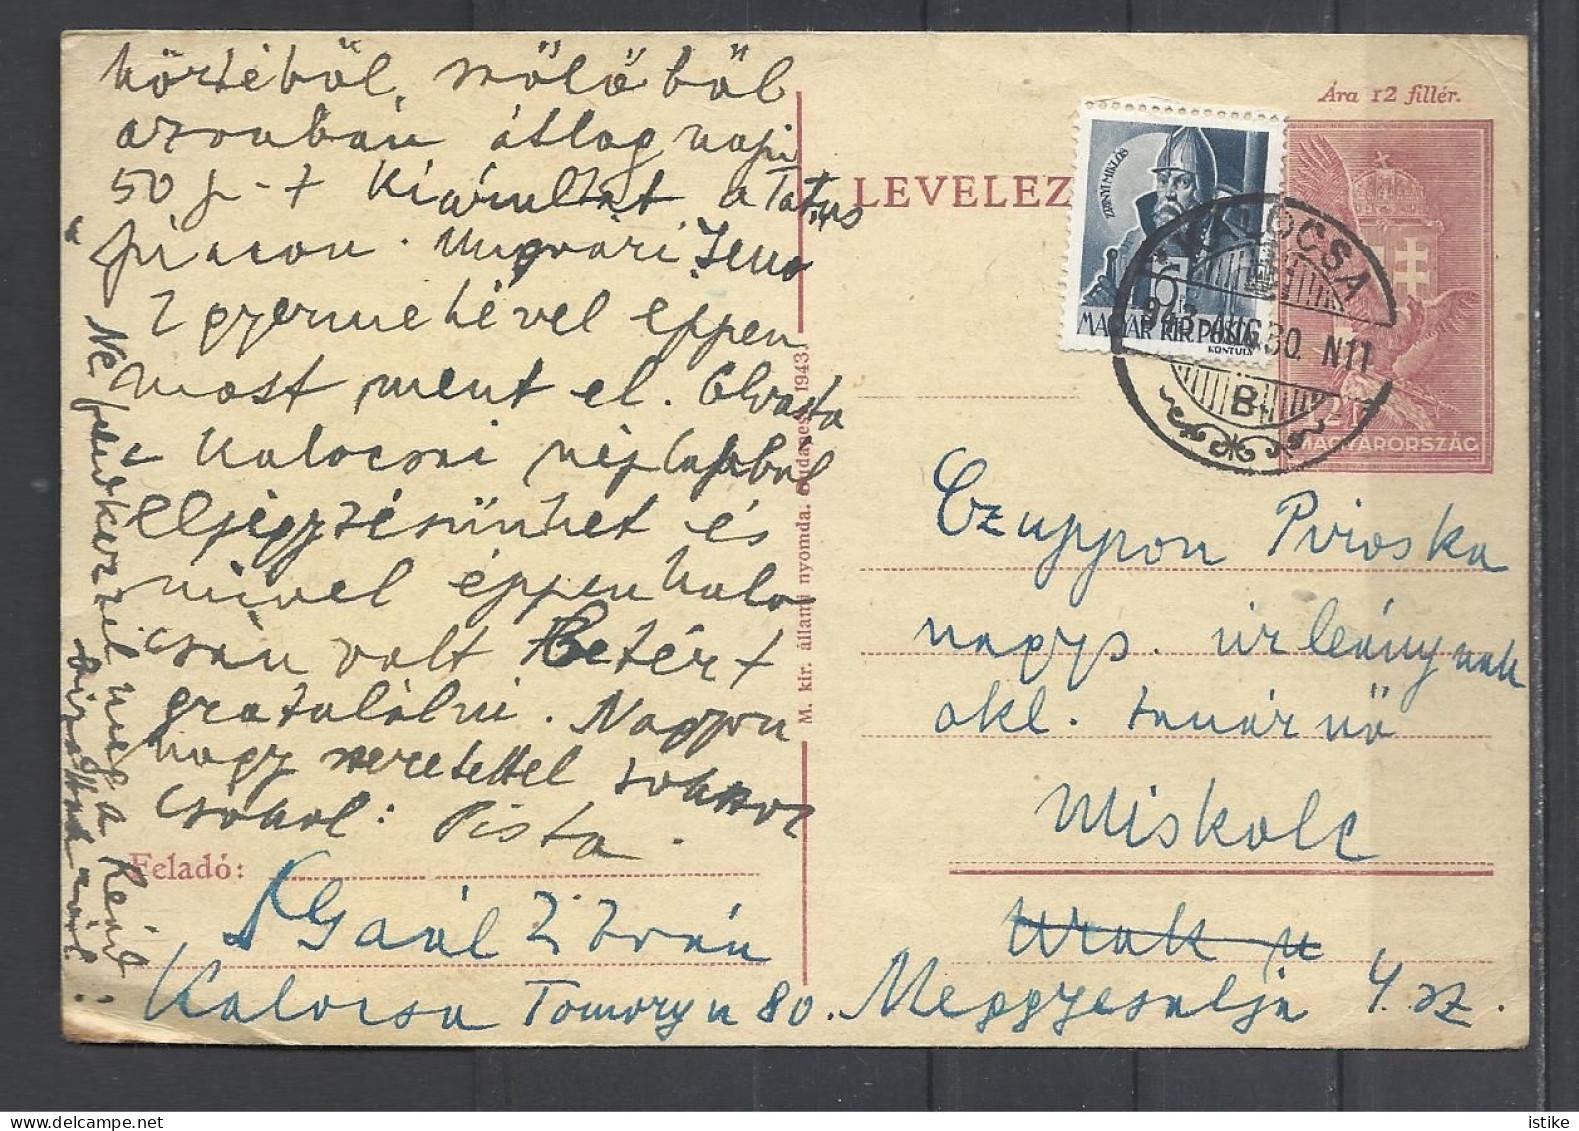 Hungary, St. Card, 12 Fiilér, Additional Stamp, 1943. - Postal Stationery